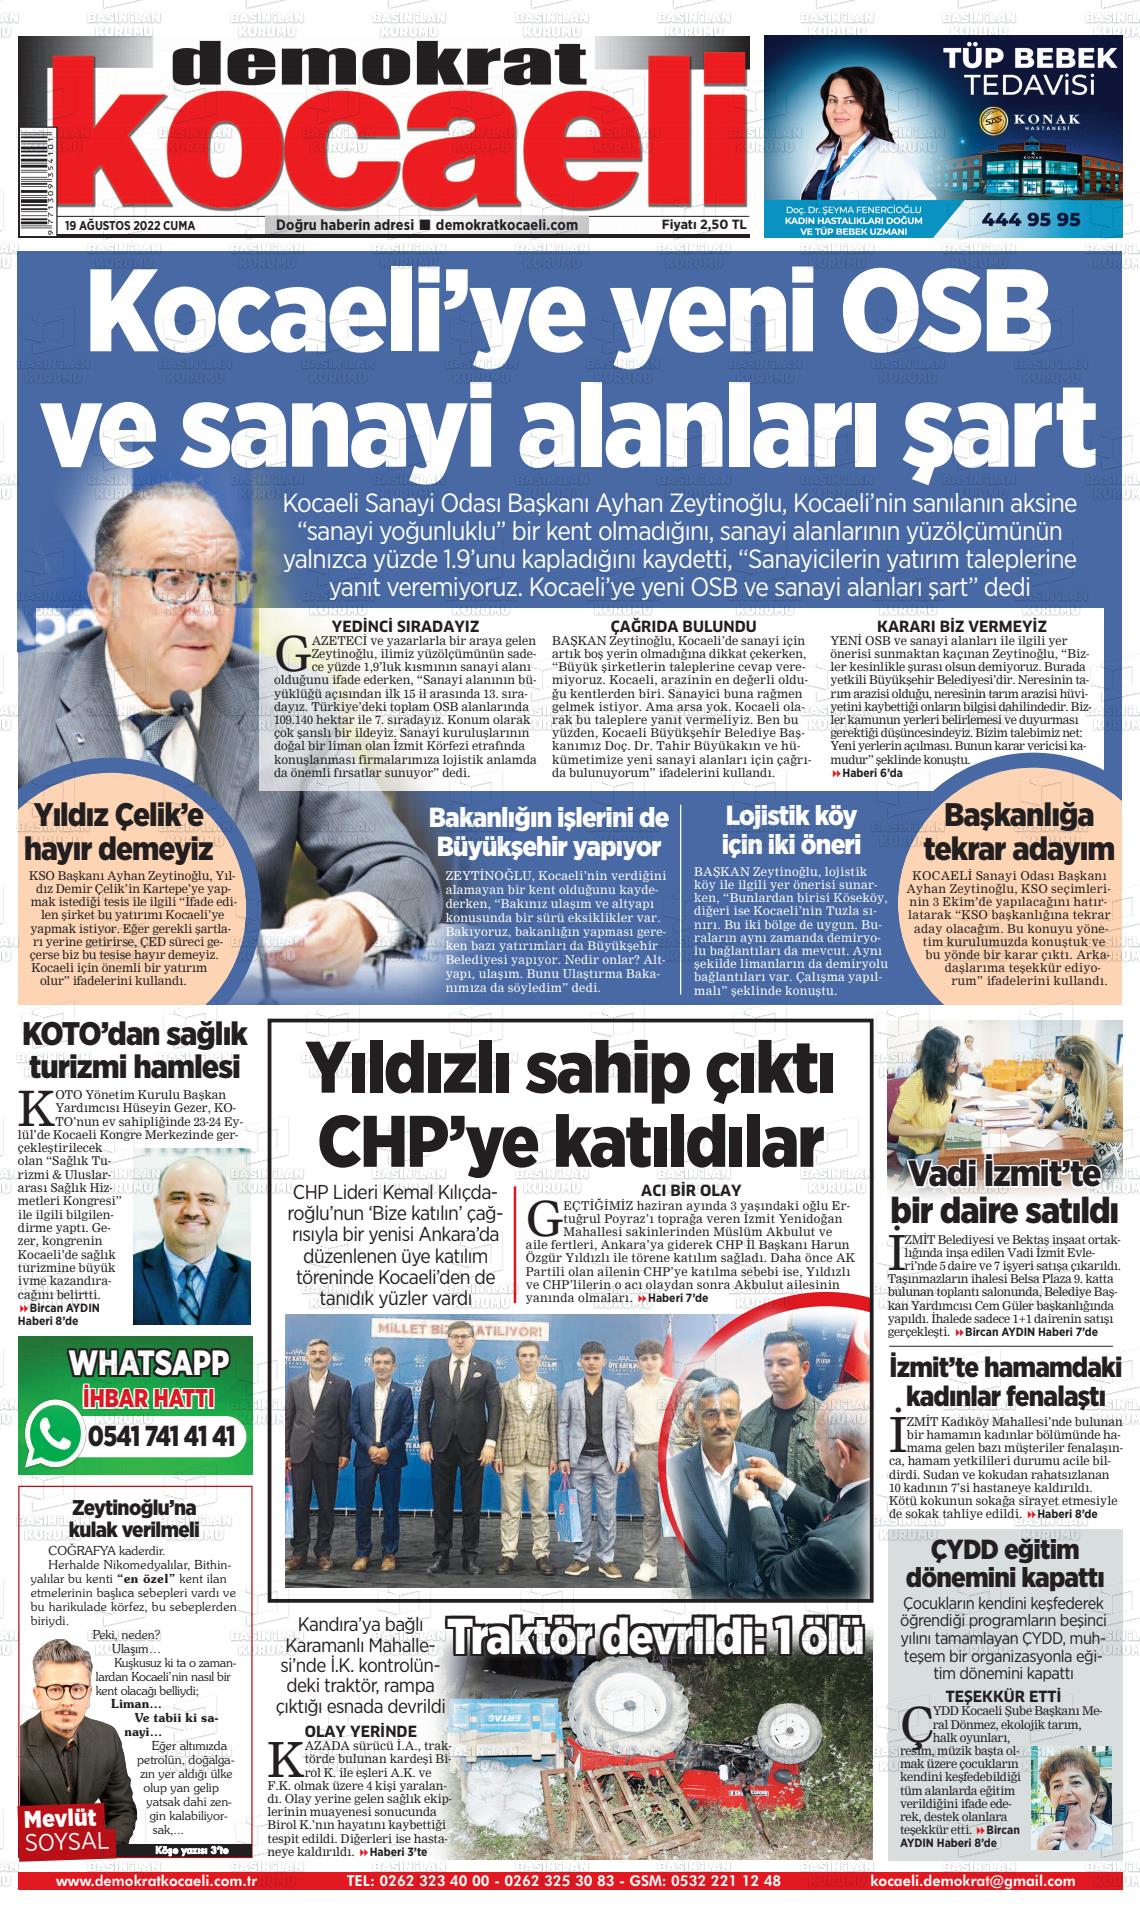 19 Ağustos 2022 Demokrat Kocaeli Gazete Manşeti